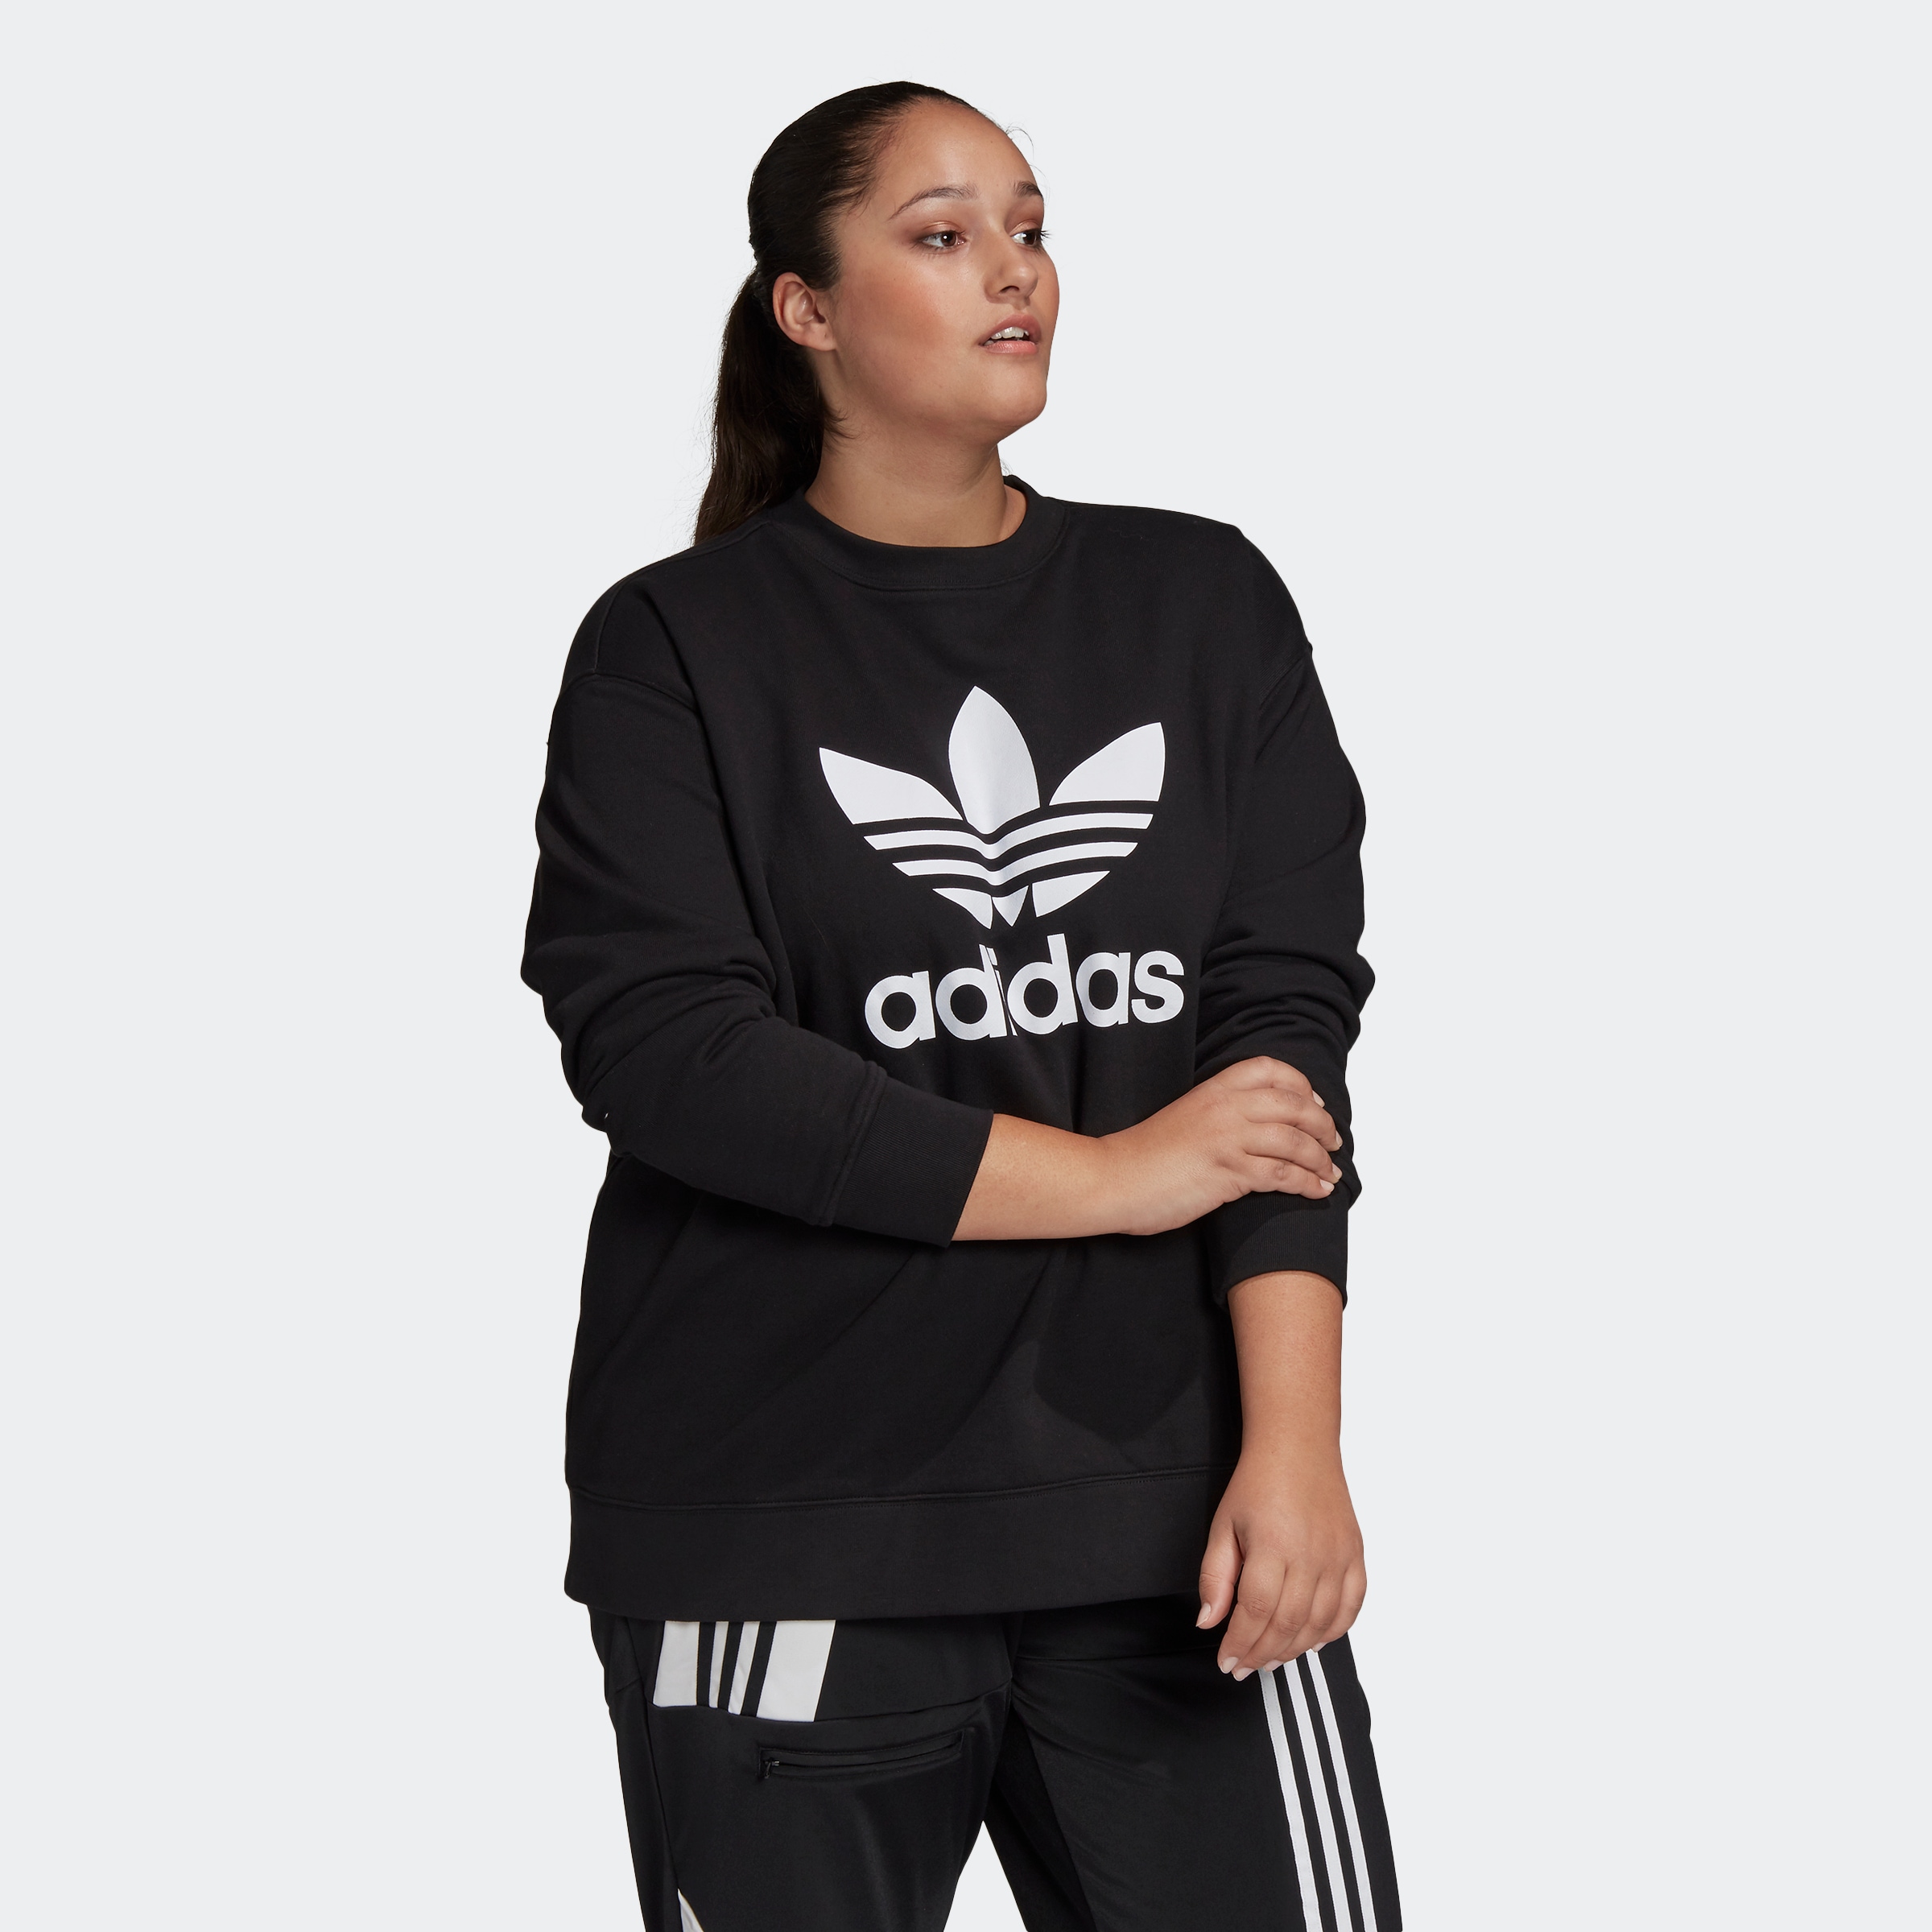 adidas Damen TRF Crew Sweat Sweatshirt, Black/White, 3X